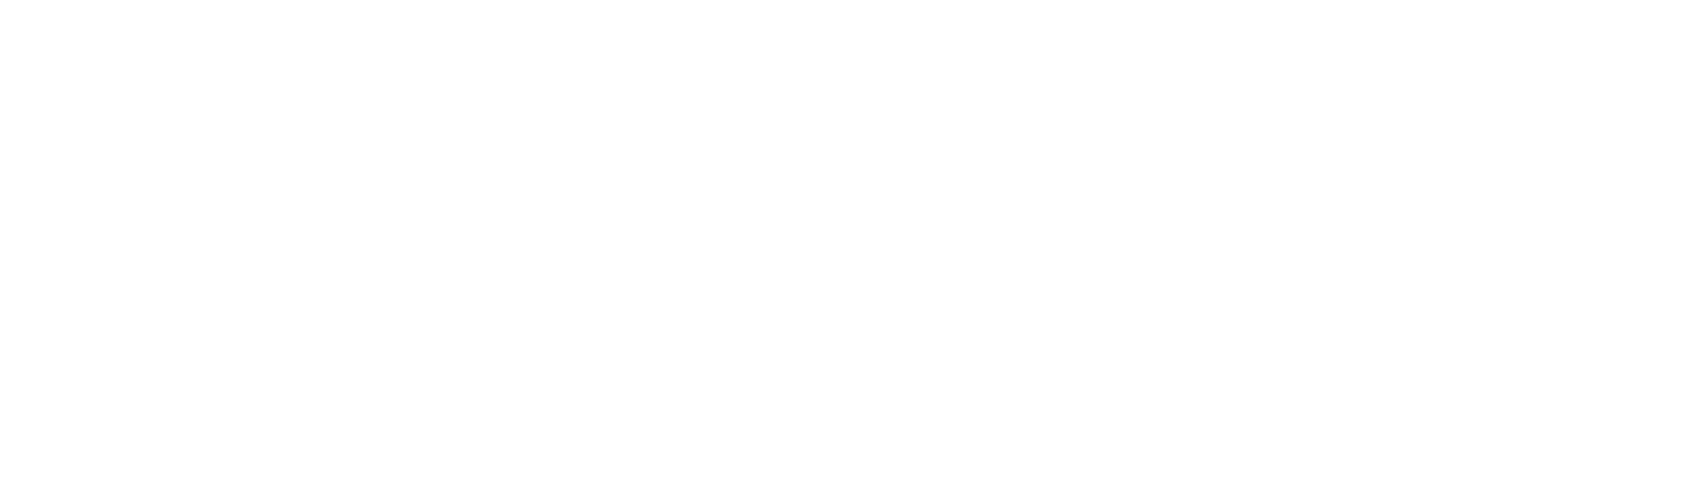 2022 Medical Captive Forum Logo – White – Smaller